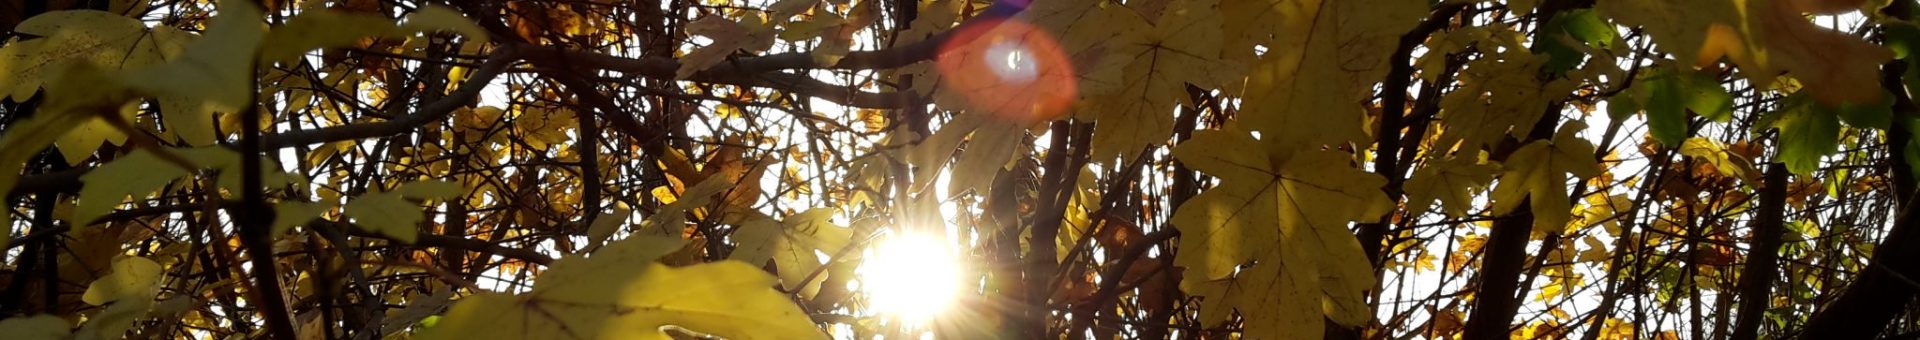 Photo of sunlight shining through autumn tree canopy.